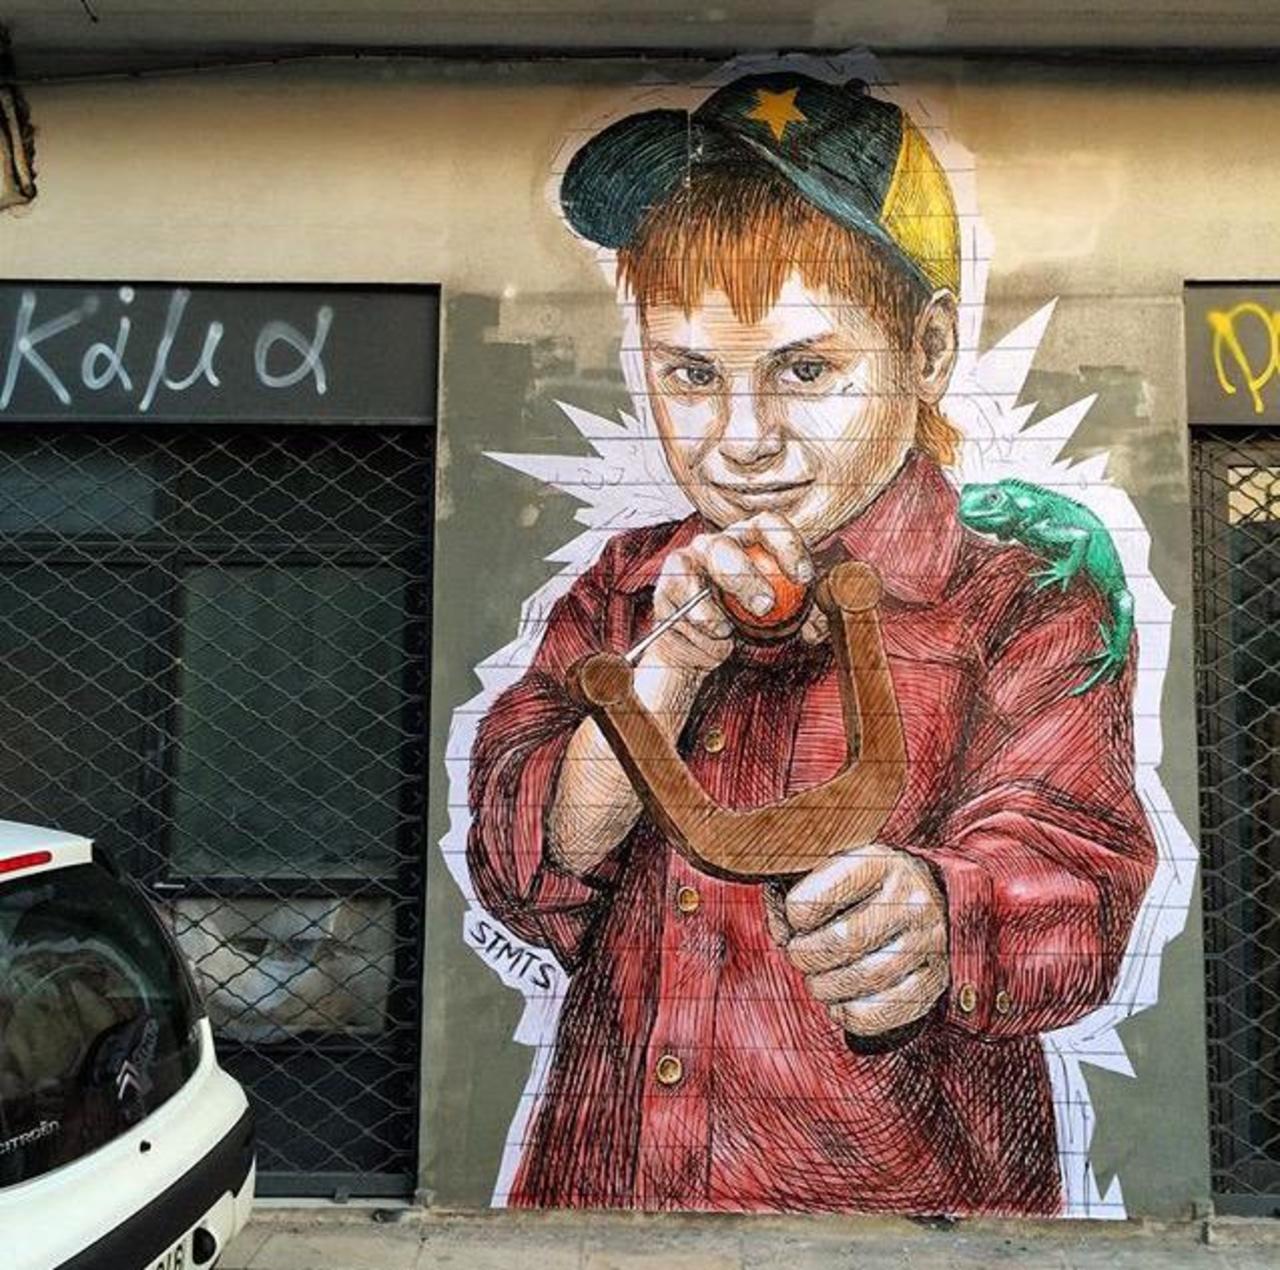 Street Art by STMTS in Athens

#art #graffiti #mural #streetart http://t.co/TGJqfBEGEM